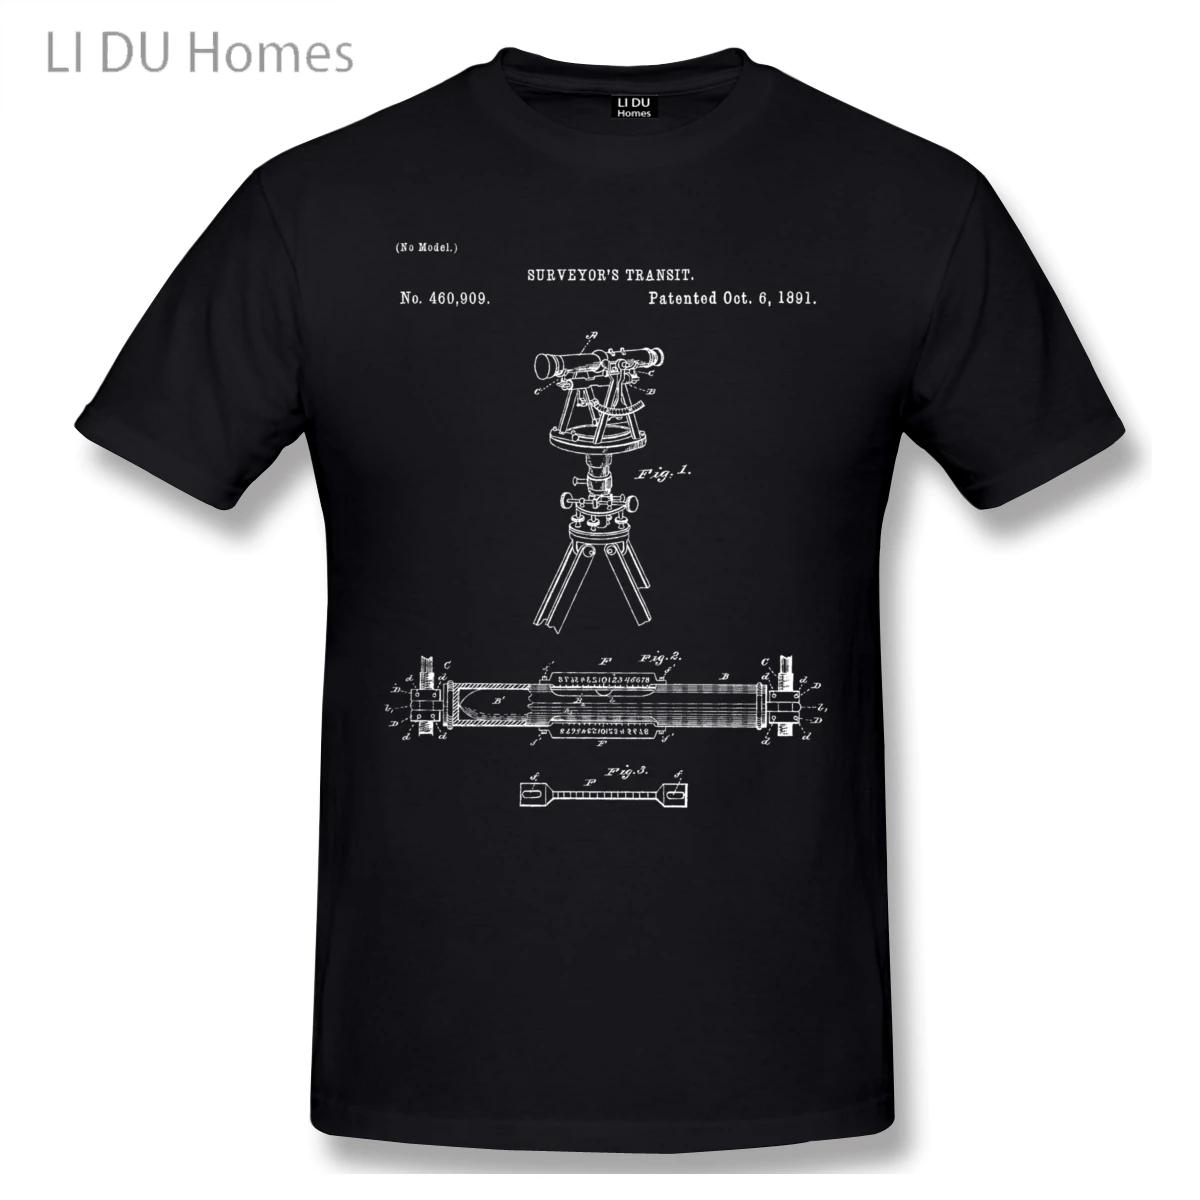 LIDU-빈티지 측량 운송 도구 티셔츠, 여성 남성 티셔츠, 코튼, 여름 티셔츠, 반팔 그래픽 티 탑